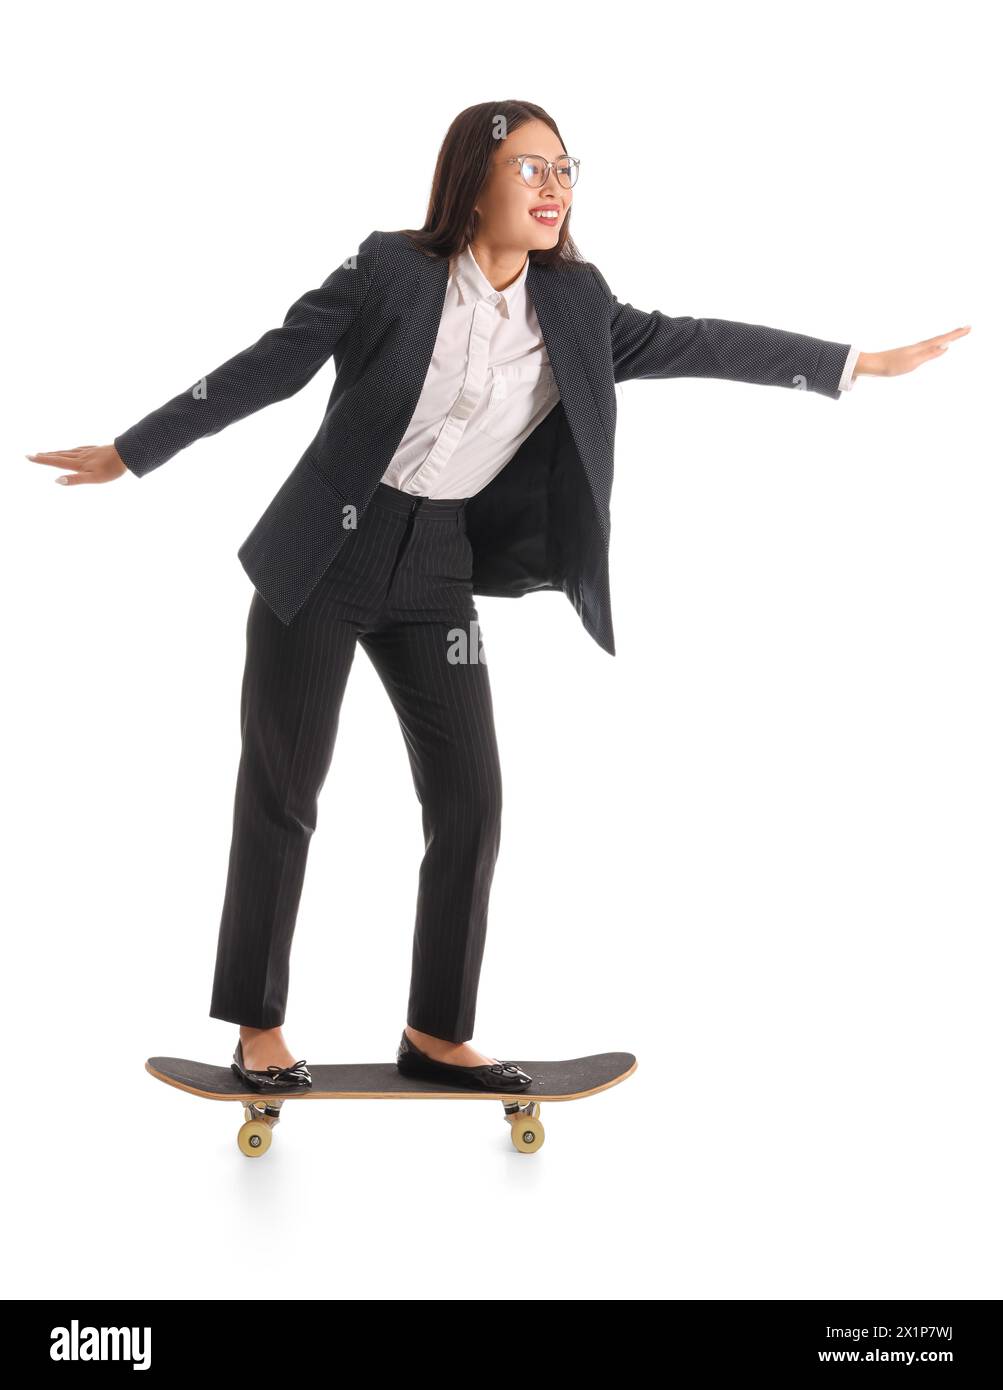 Funny Asian businesswoman riding skateboard on white background Stock Photo